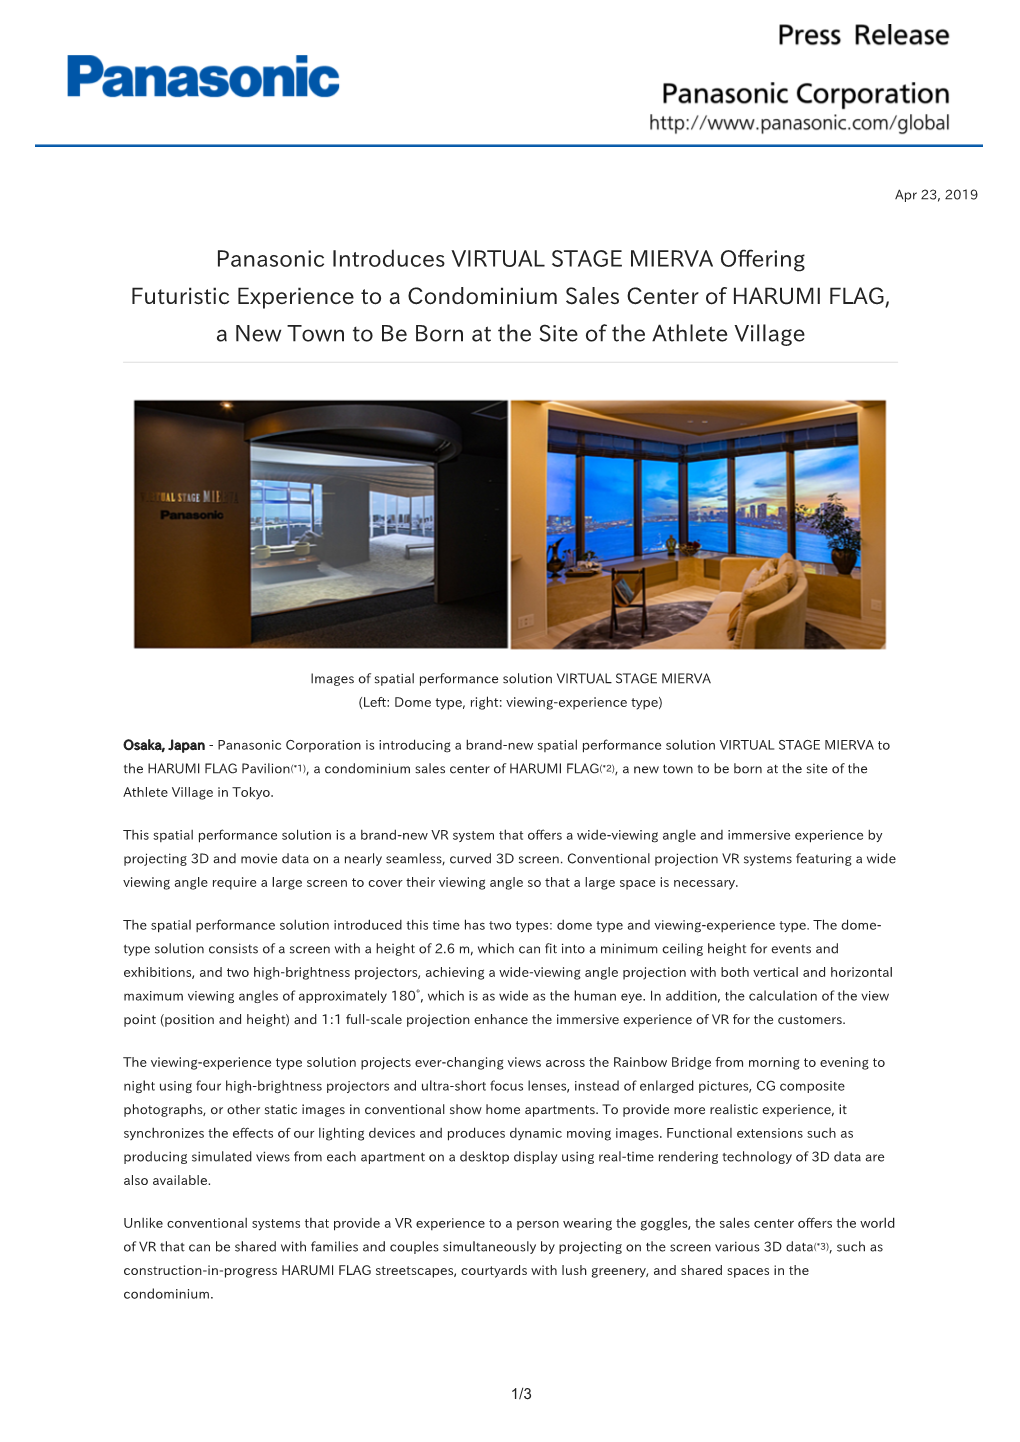 Panasonic Introduces VIRTUAL STAGE MIERVA Offering Futuristic